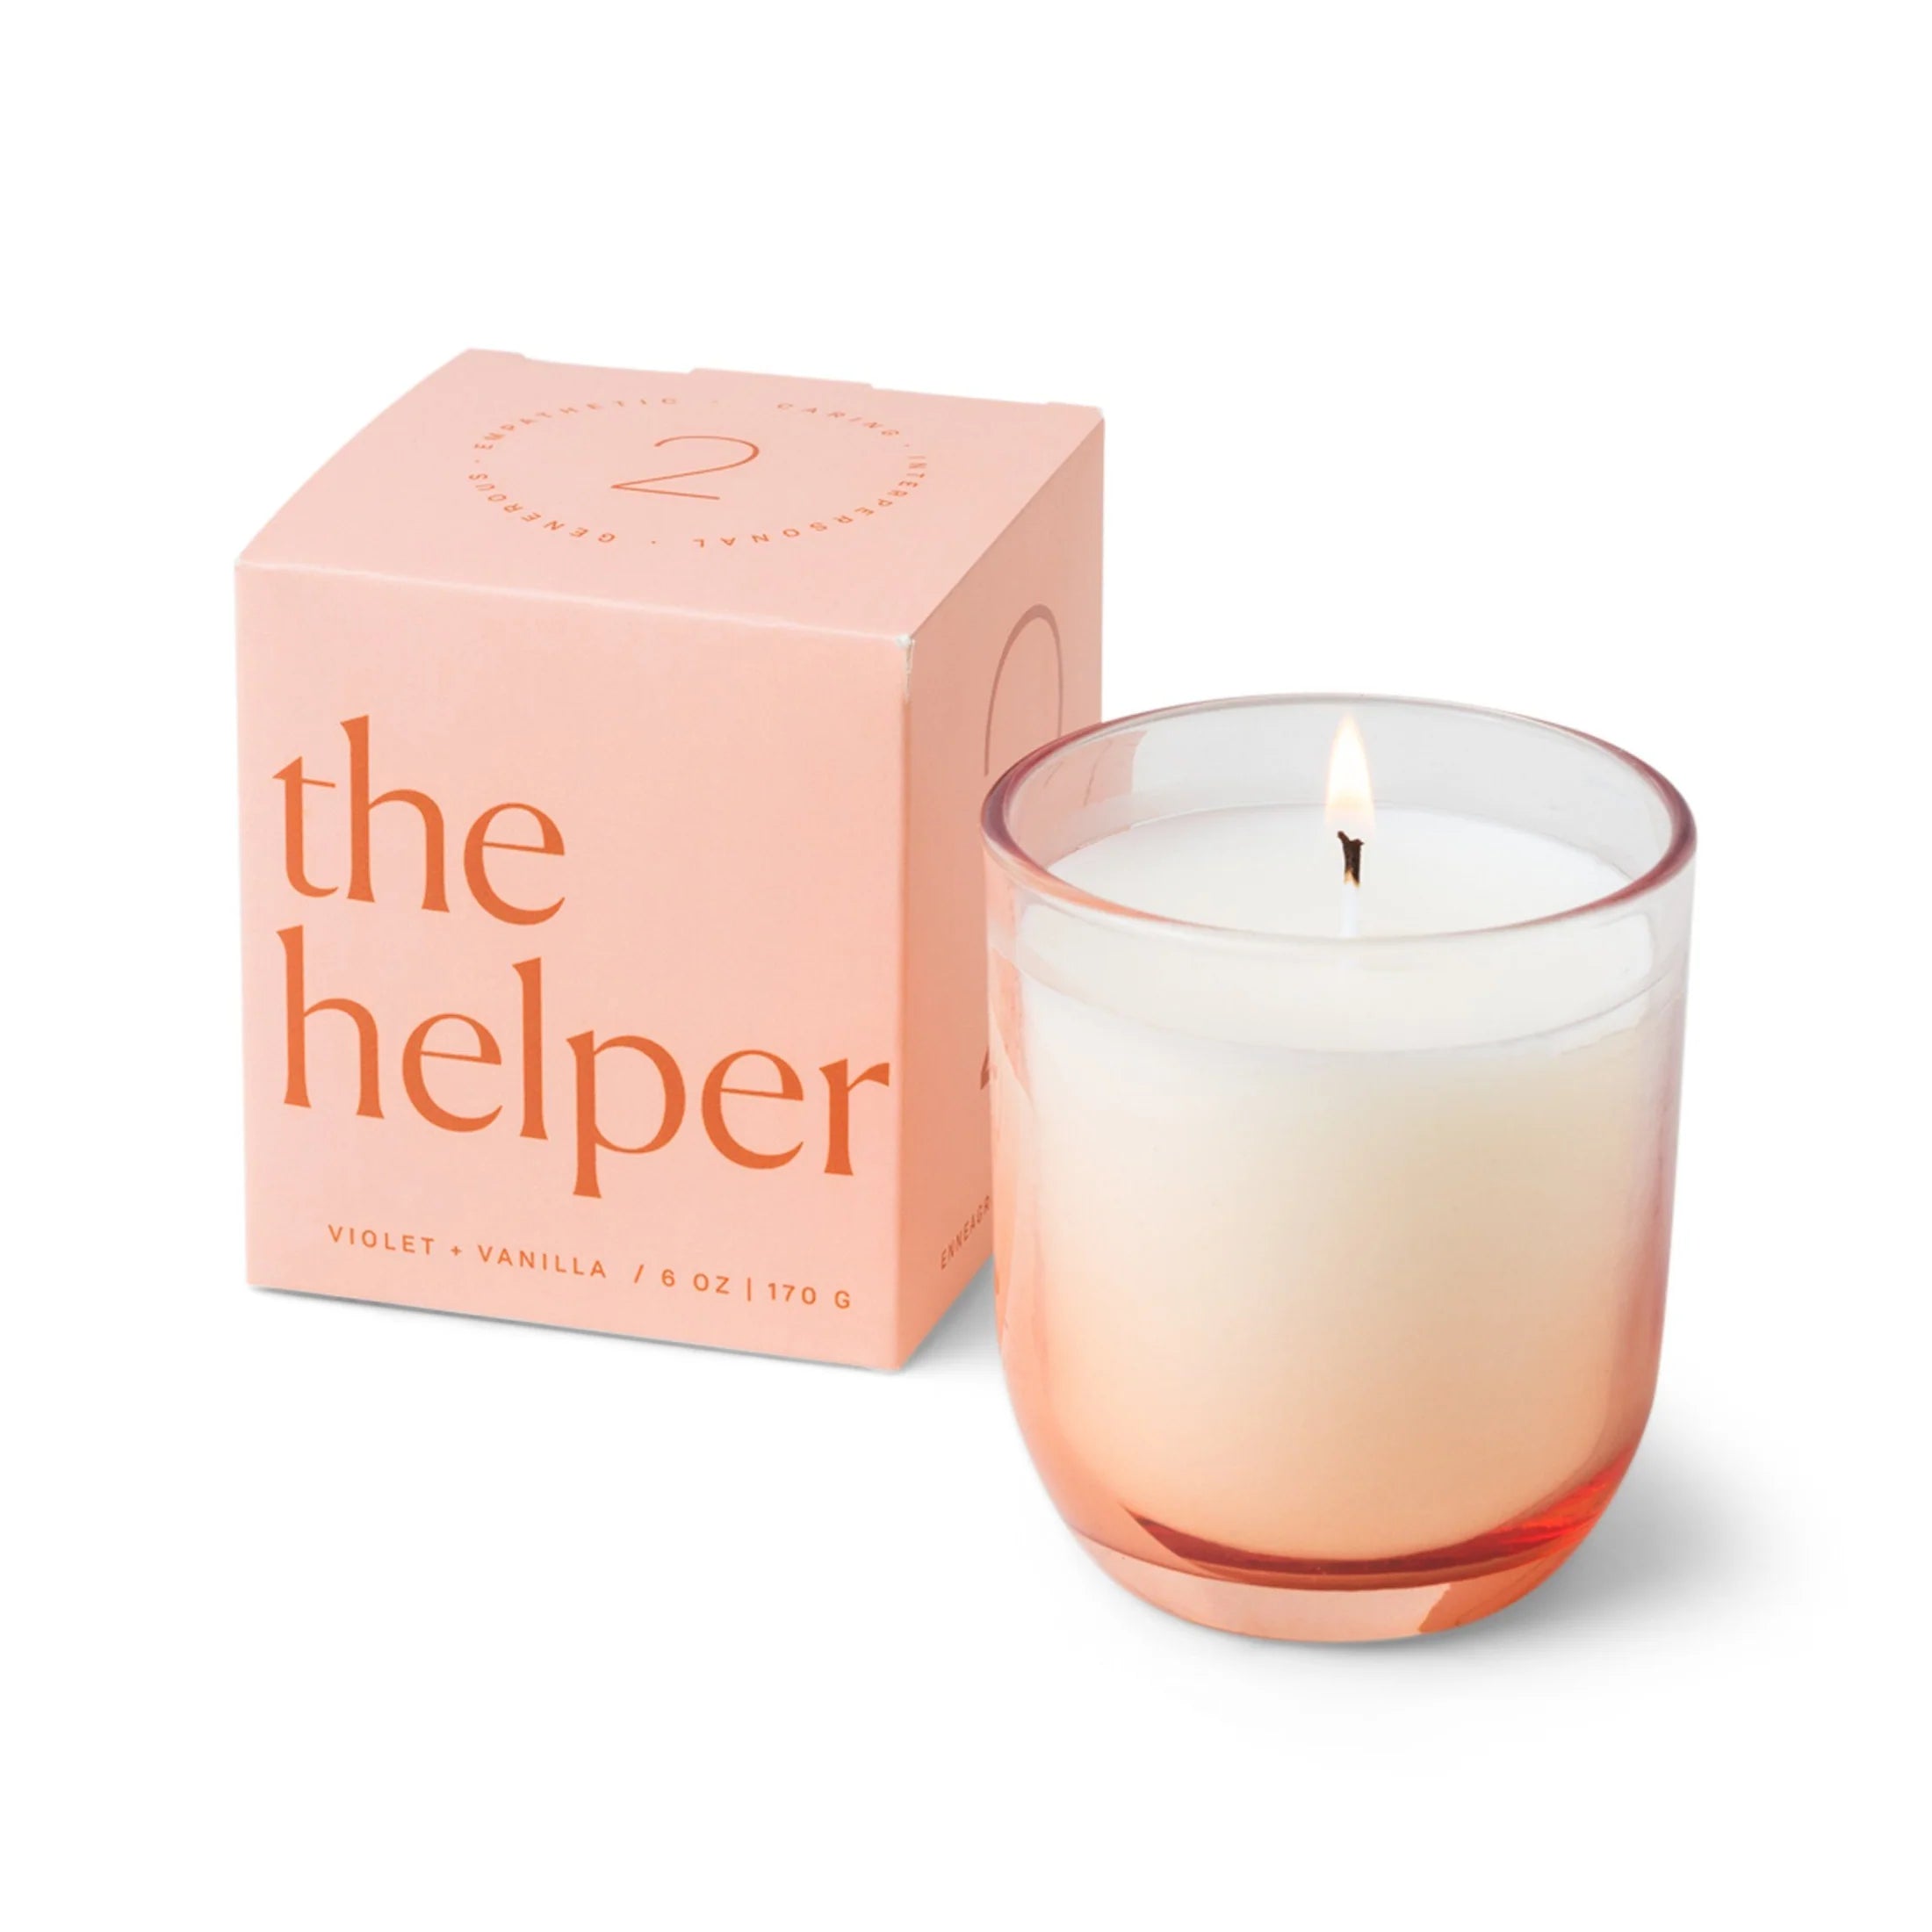 Enneagram #2 The Helper Candle - Violet + Vanilla